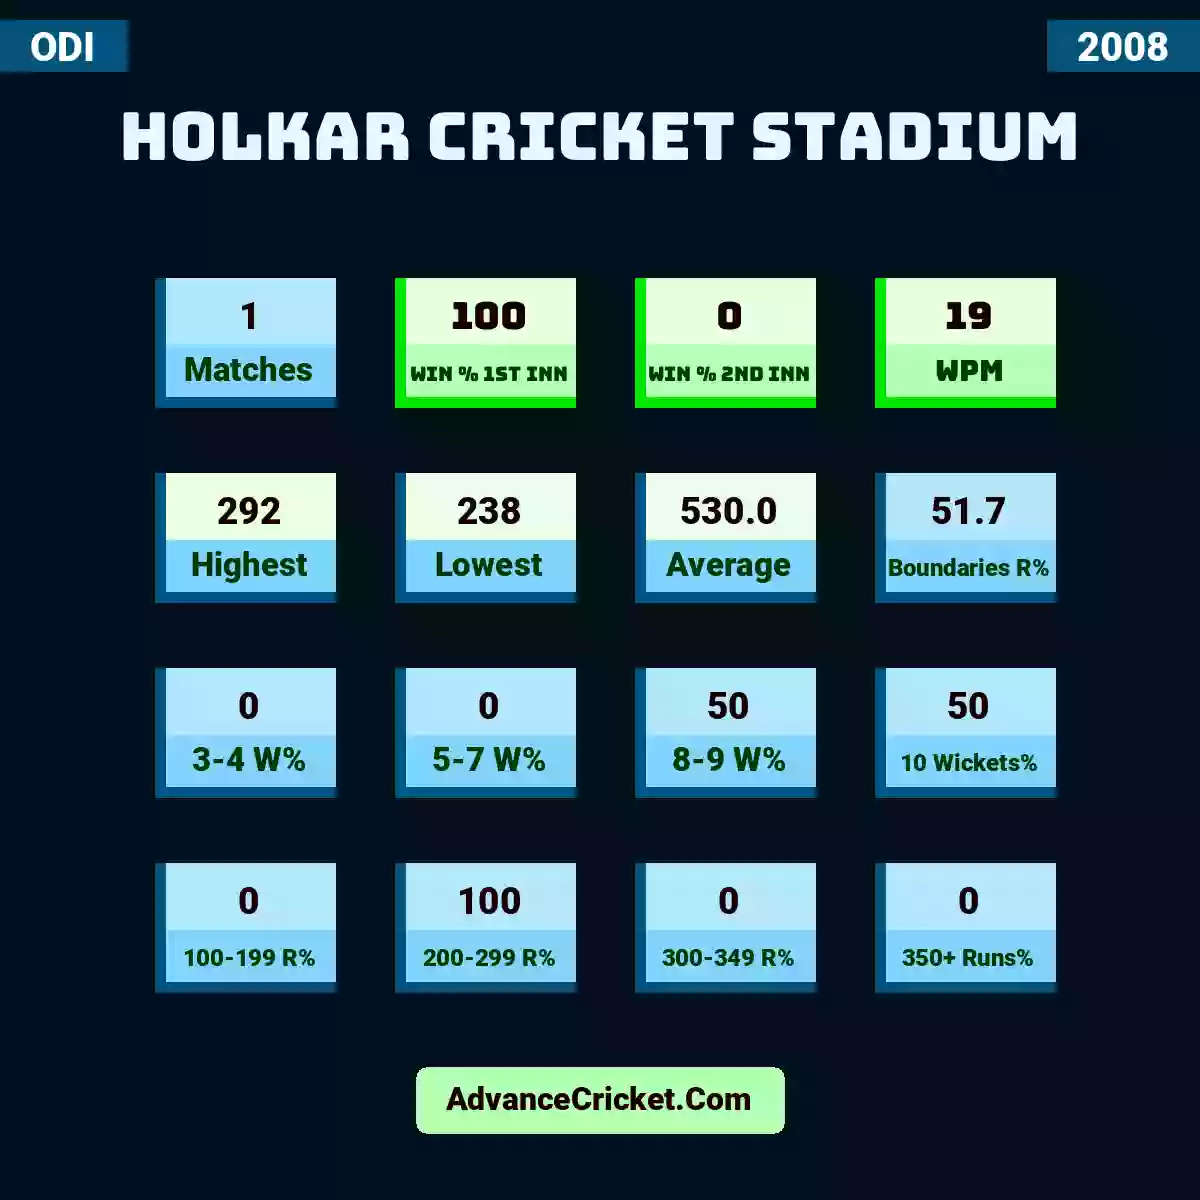 Image showing Holkar Cricket Stadium with Matches: 1, Win % 1st Inn: 100, Win % 2nd Inn: 0, WPM: 19, Highest: 292, Lowest: 238, Average: 530.0, Boundaries R%: 51.7, 3-4 W%: 0, 5-7 W%: 0, 8-9 W%: 50, 10 Wickets%: 50, 100-199 R%: 0, 200-299 R%: 100, 300-349 R%: 0, 350+ Runs%: 0.